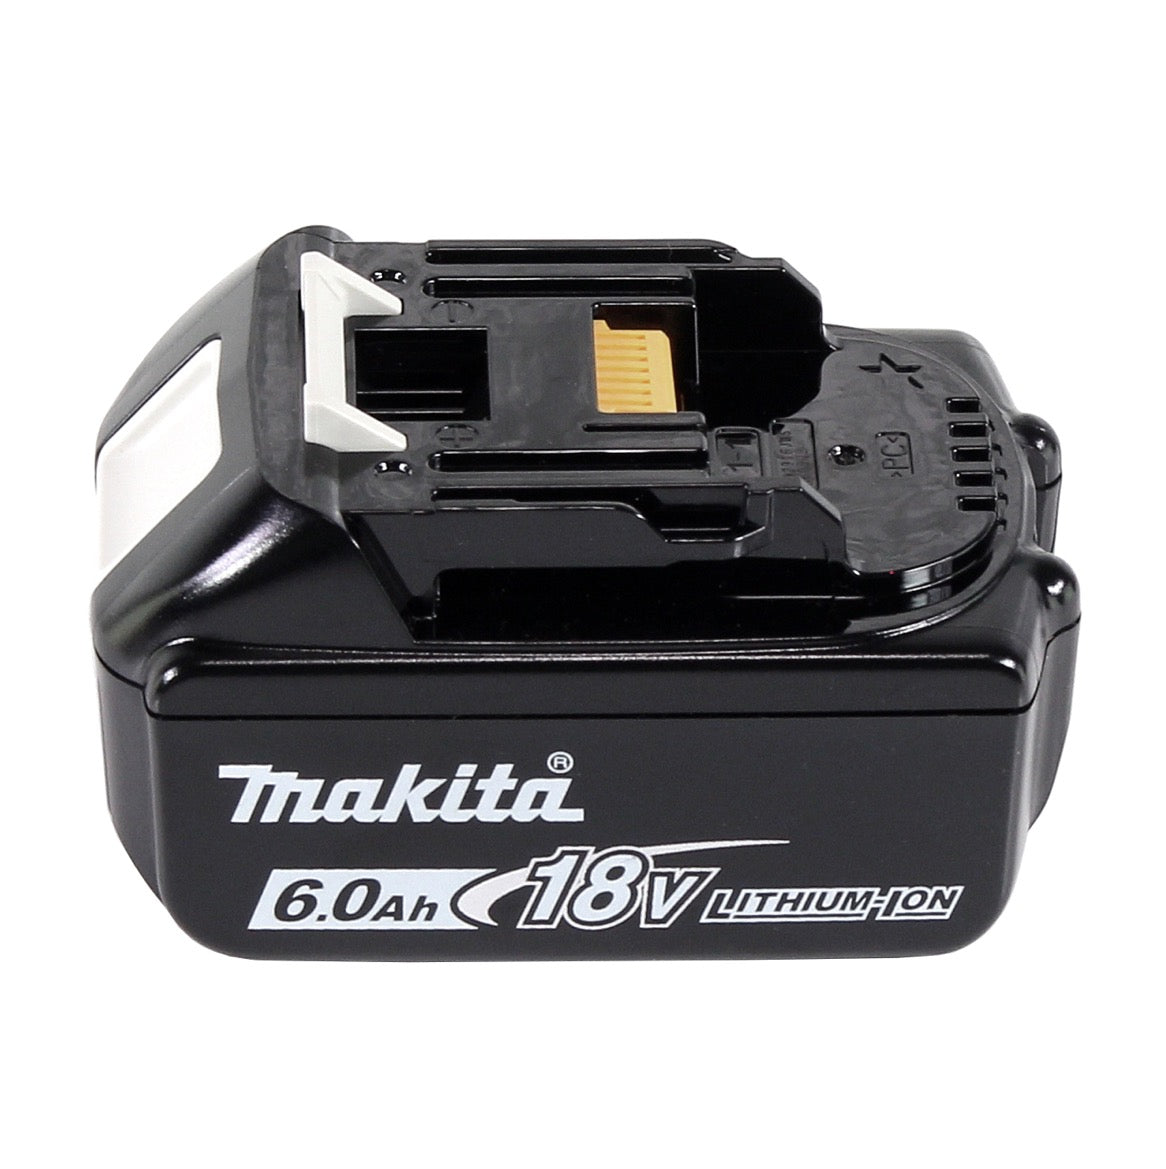 Makita DDF 485 G1 Akku Bohrschrauber 18 V 50 Nm Brushless + 1x Akku 6,0 Ah - ohne Ladegerät - Toolbrothers